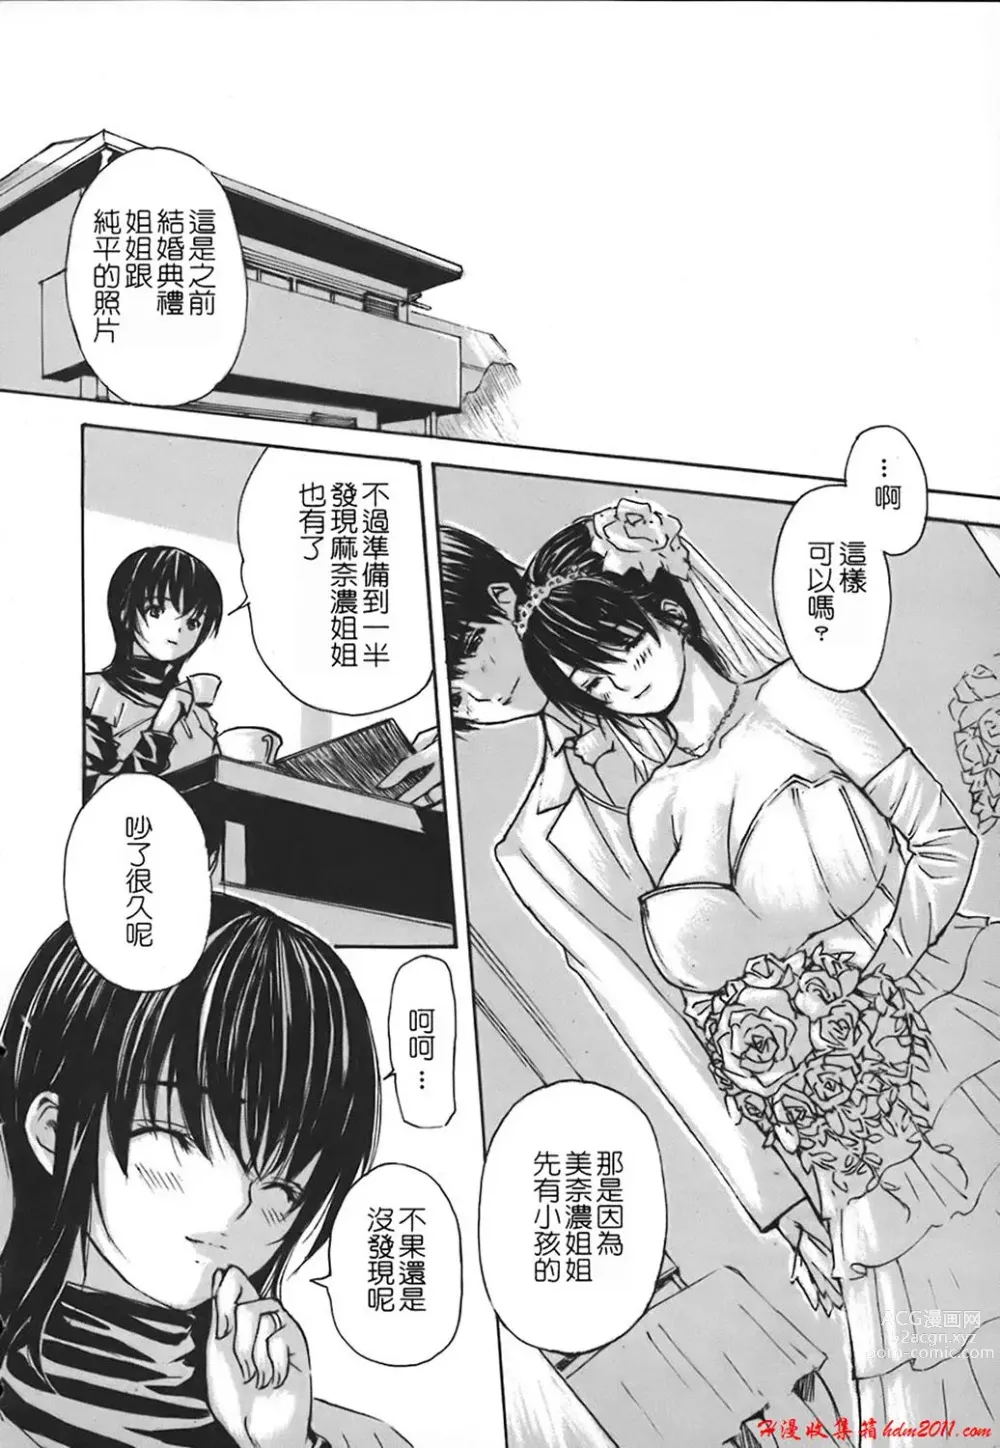 Page 851 of manga [MGジョー][Breastfeeding ~Hahachichi~] (Breastfeeding)